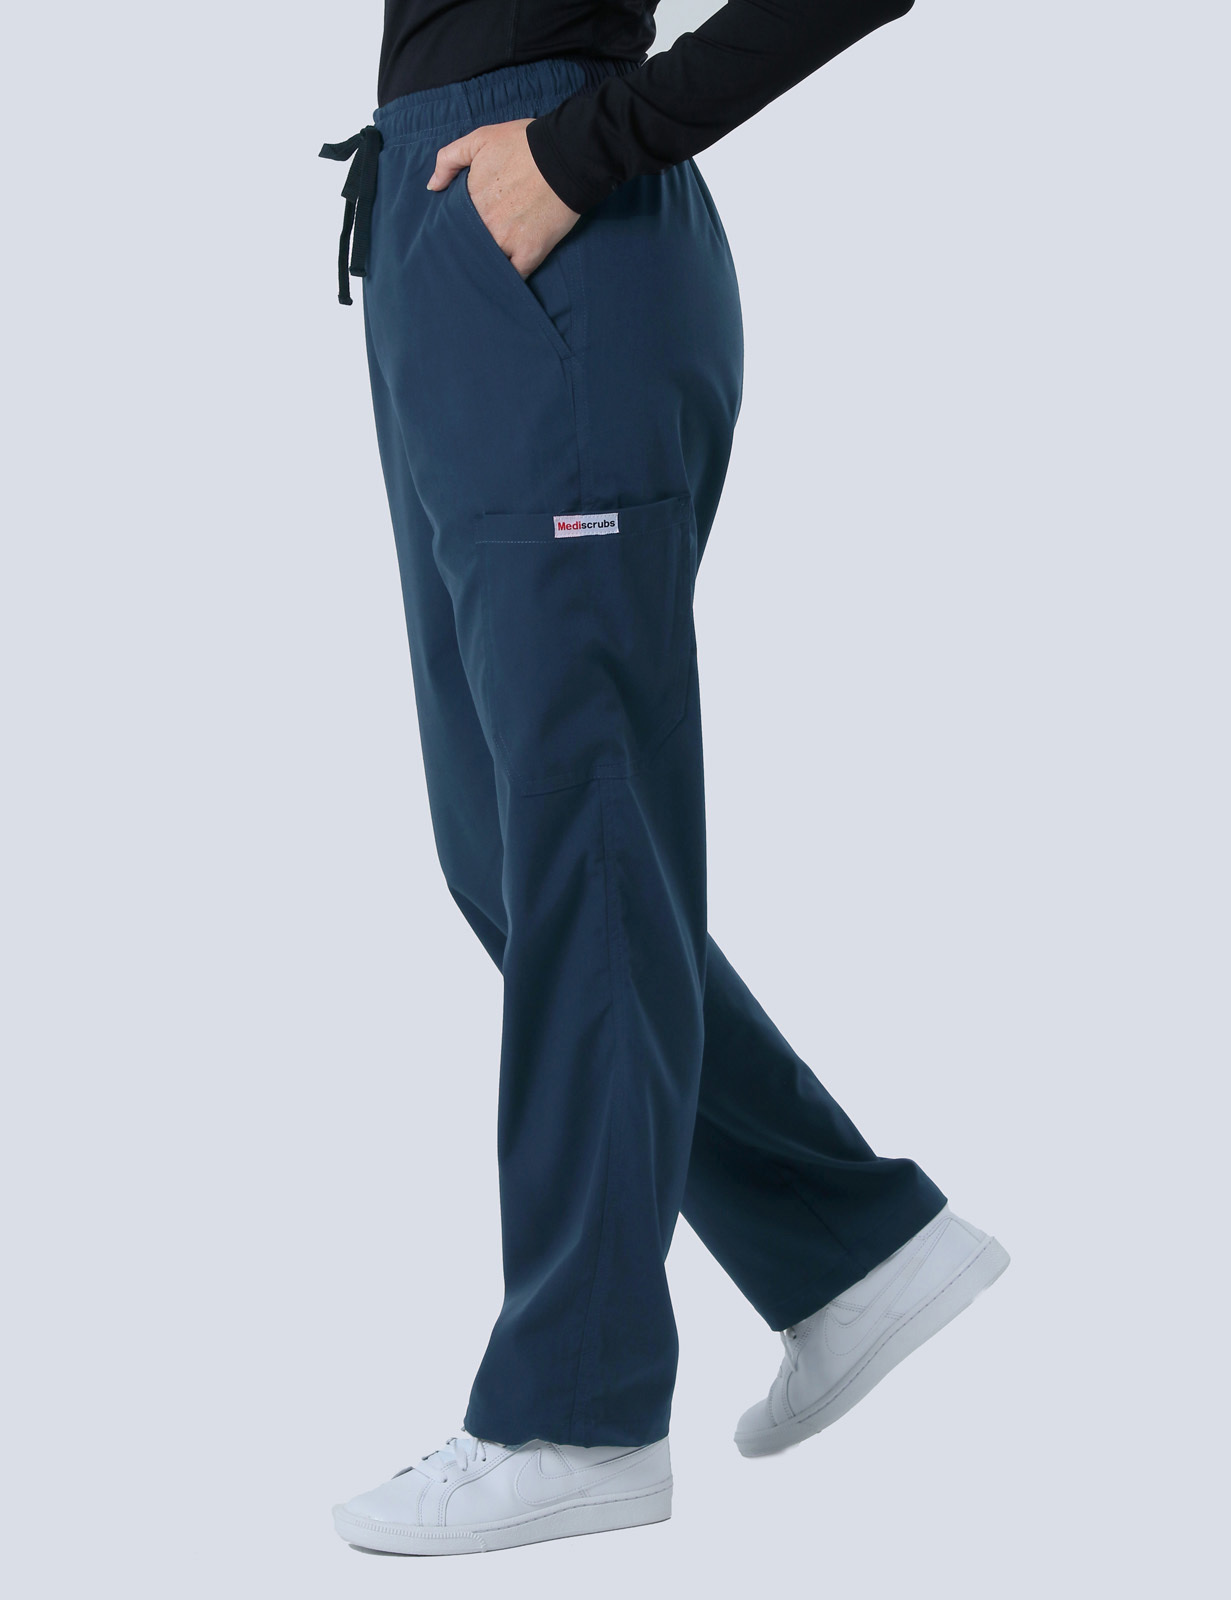 Weipa Hospital - ED CN (4 Pocket Scrub Top and Cargo Pants in Navy incl Logos)